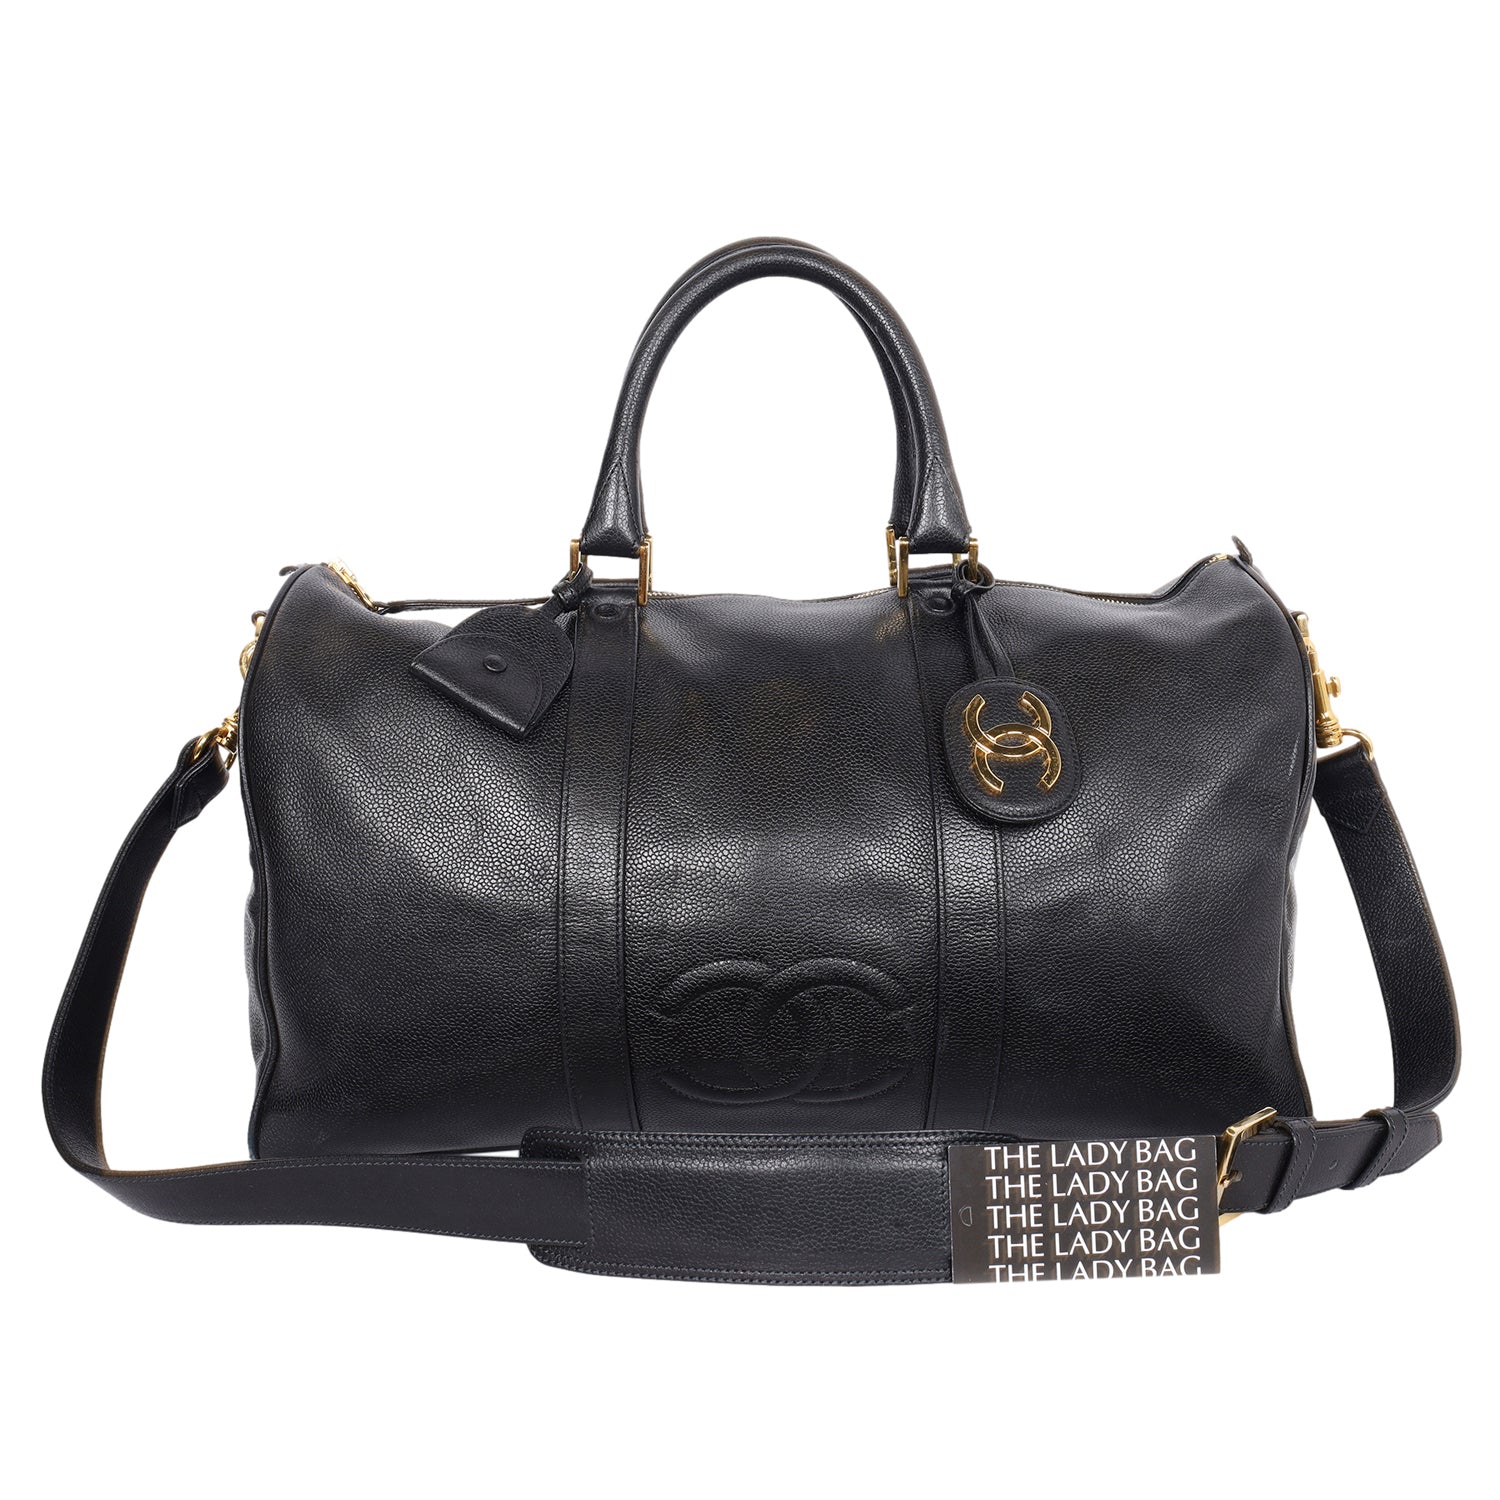 Chanel Vintage Chanel Boston Brown Leather Large Travel Bag + Straps